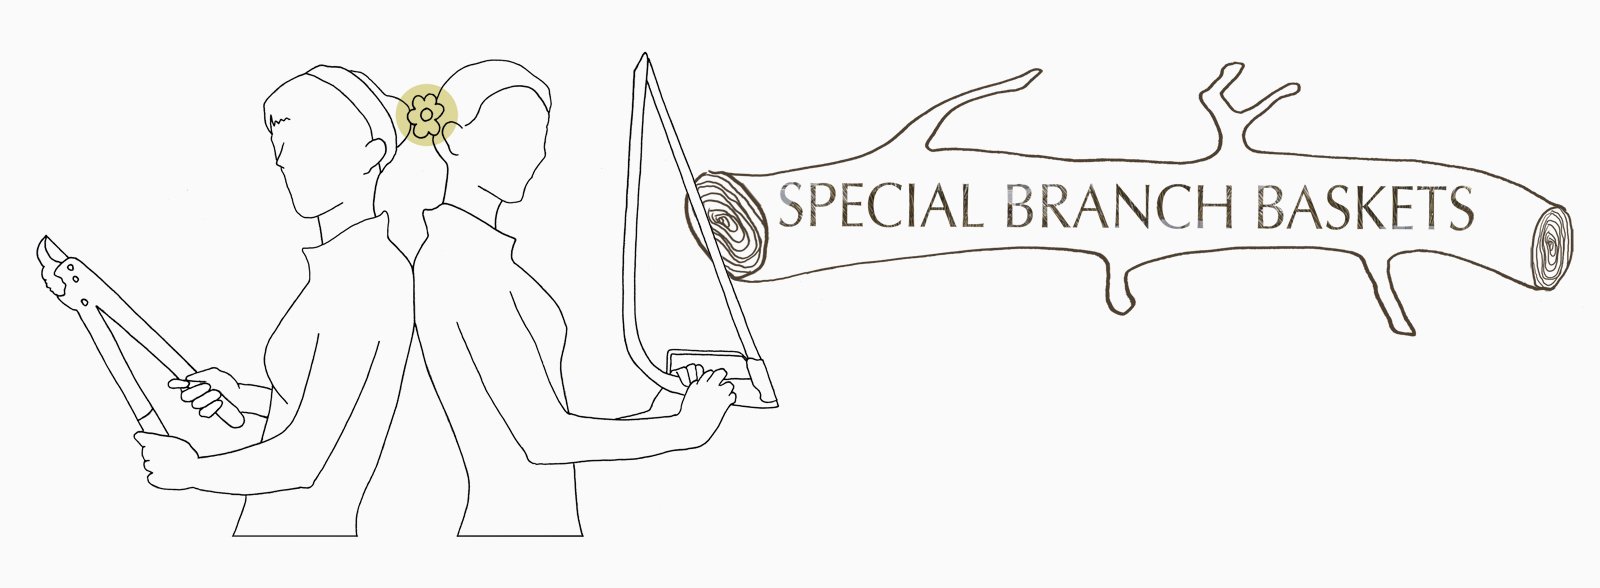 Special Branch Baskets logo